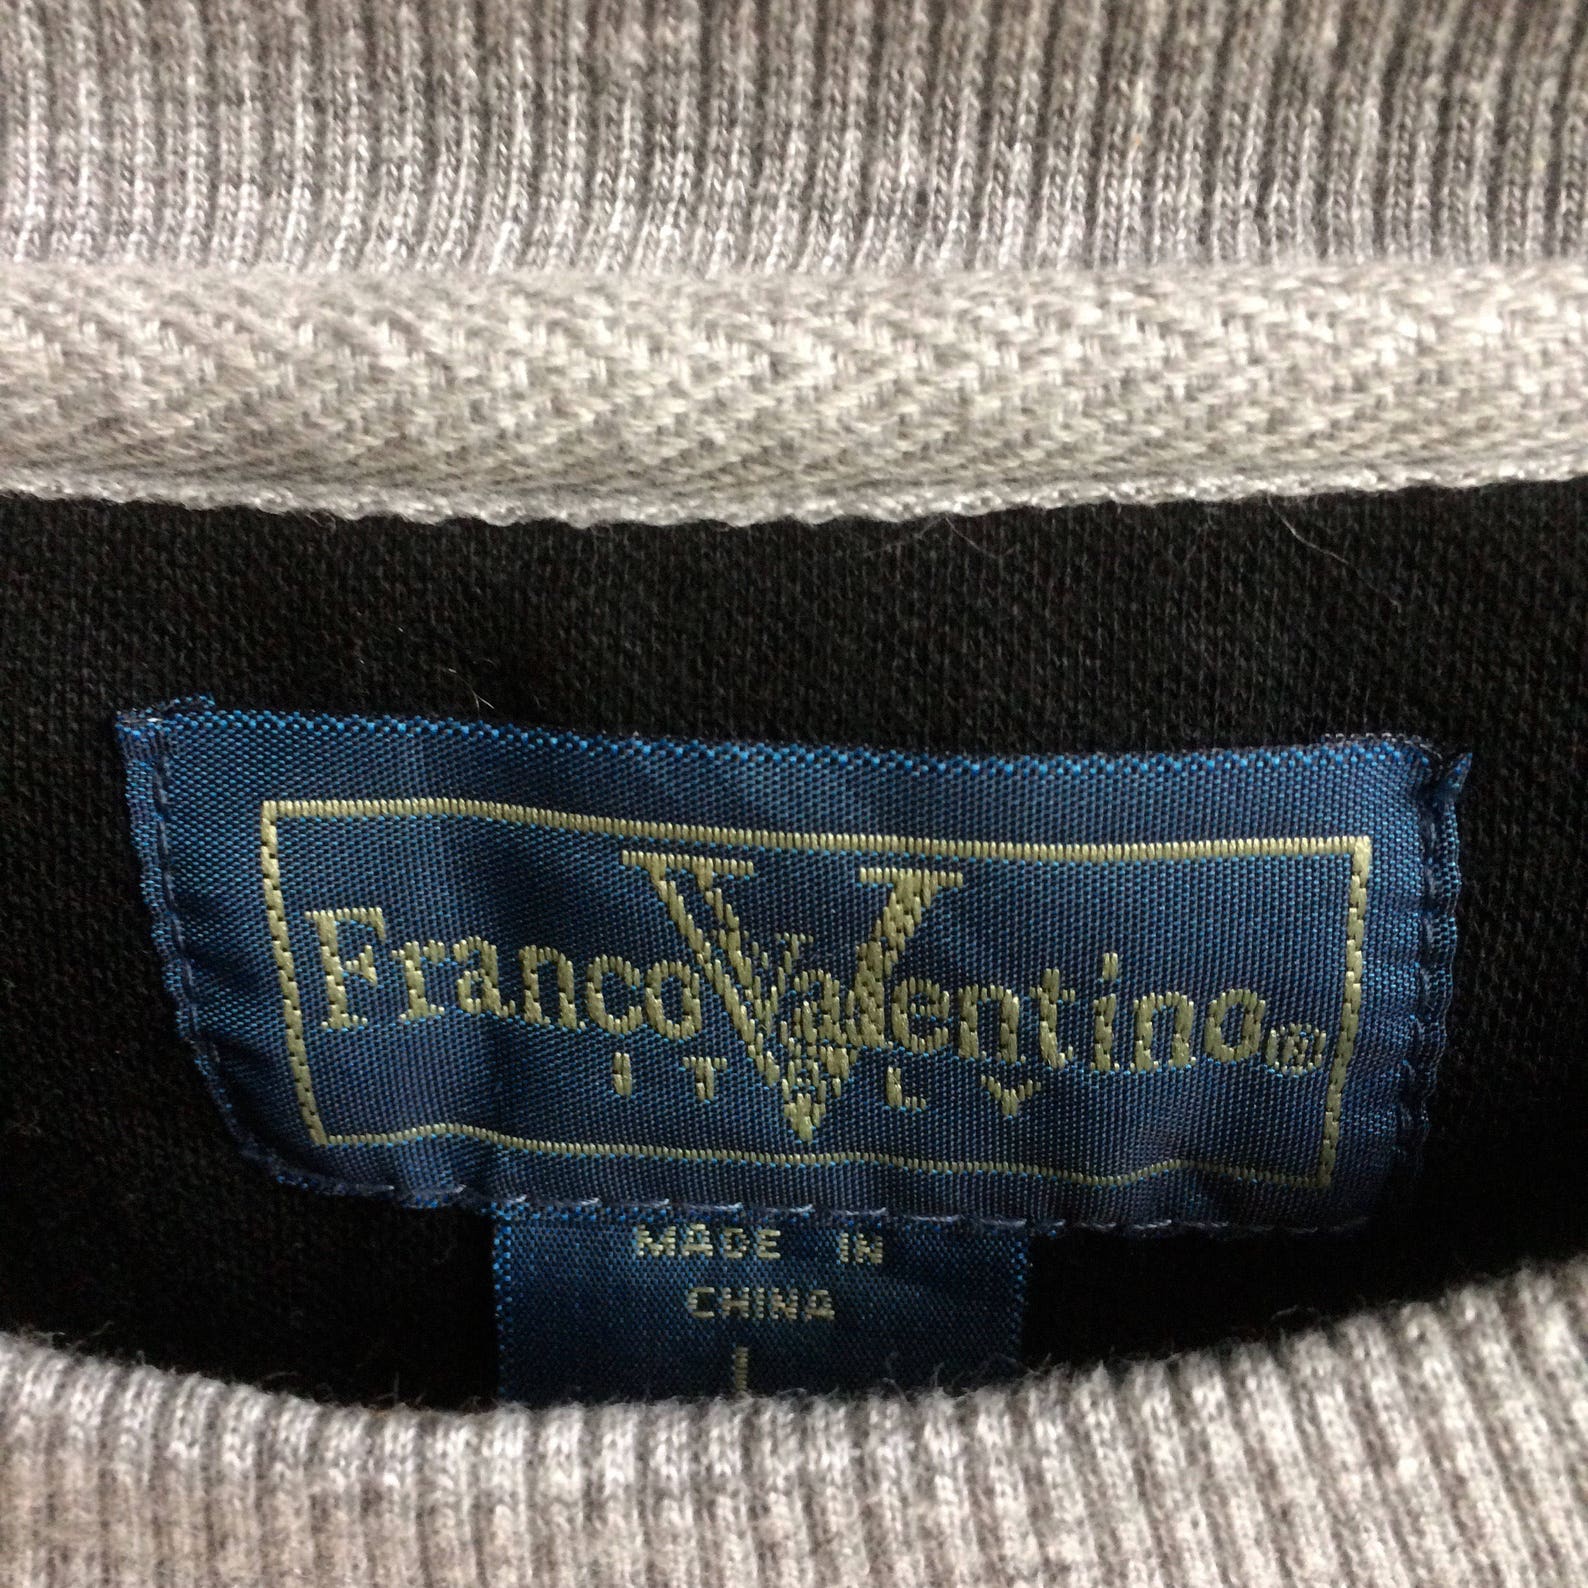 Valentino the Famous Designer FRANCO VALENTINO EMBROIDERY - Etsy